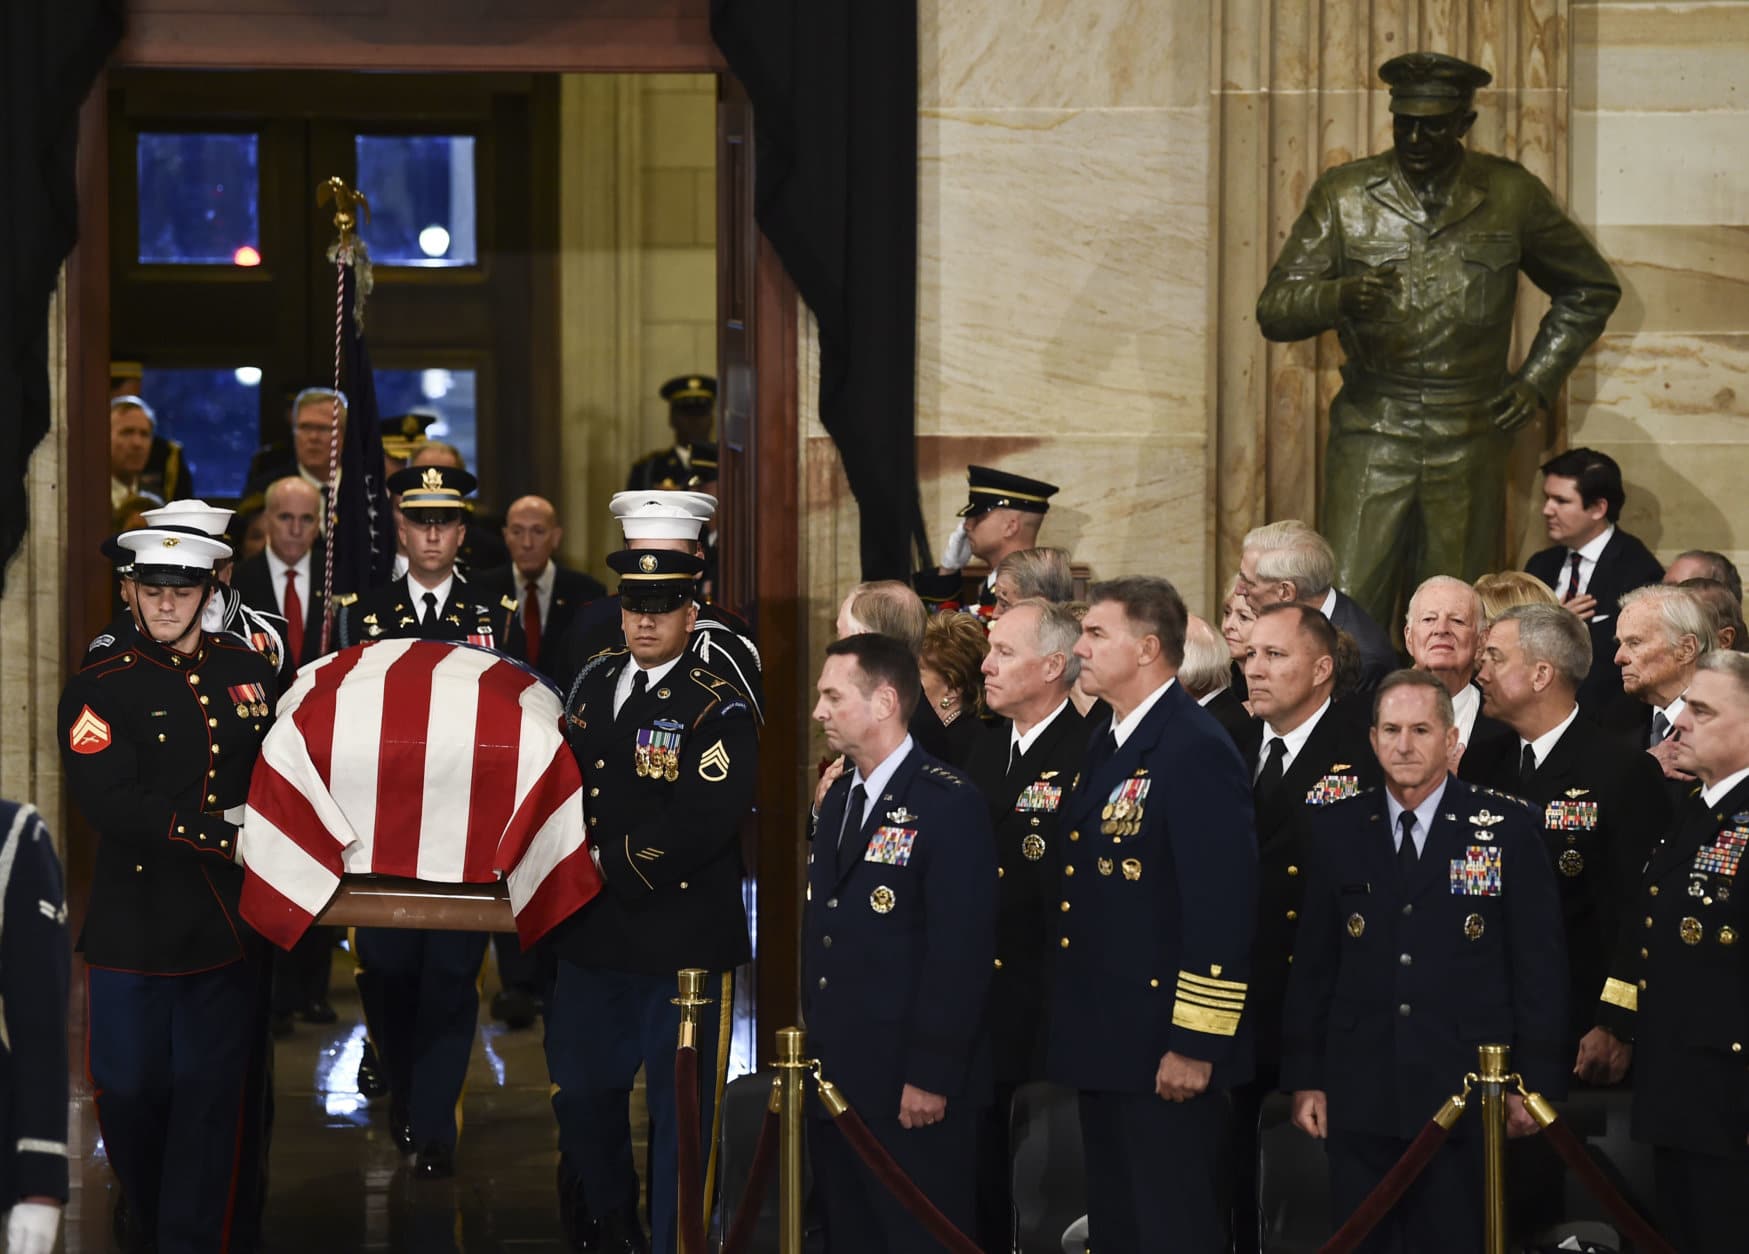 The casket bearing the remains of former President George H.W. Bush arrives at the Capitol in Washington, Monday, Dec. 3, 2018. (Brendan Smialowski/Pool Photo via AP)